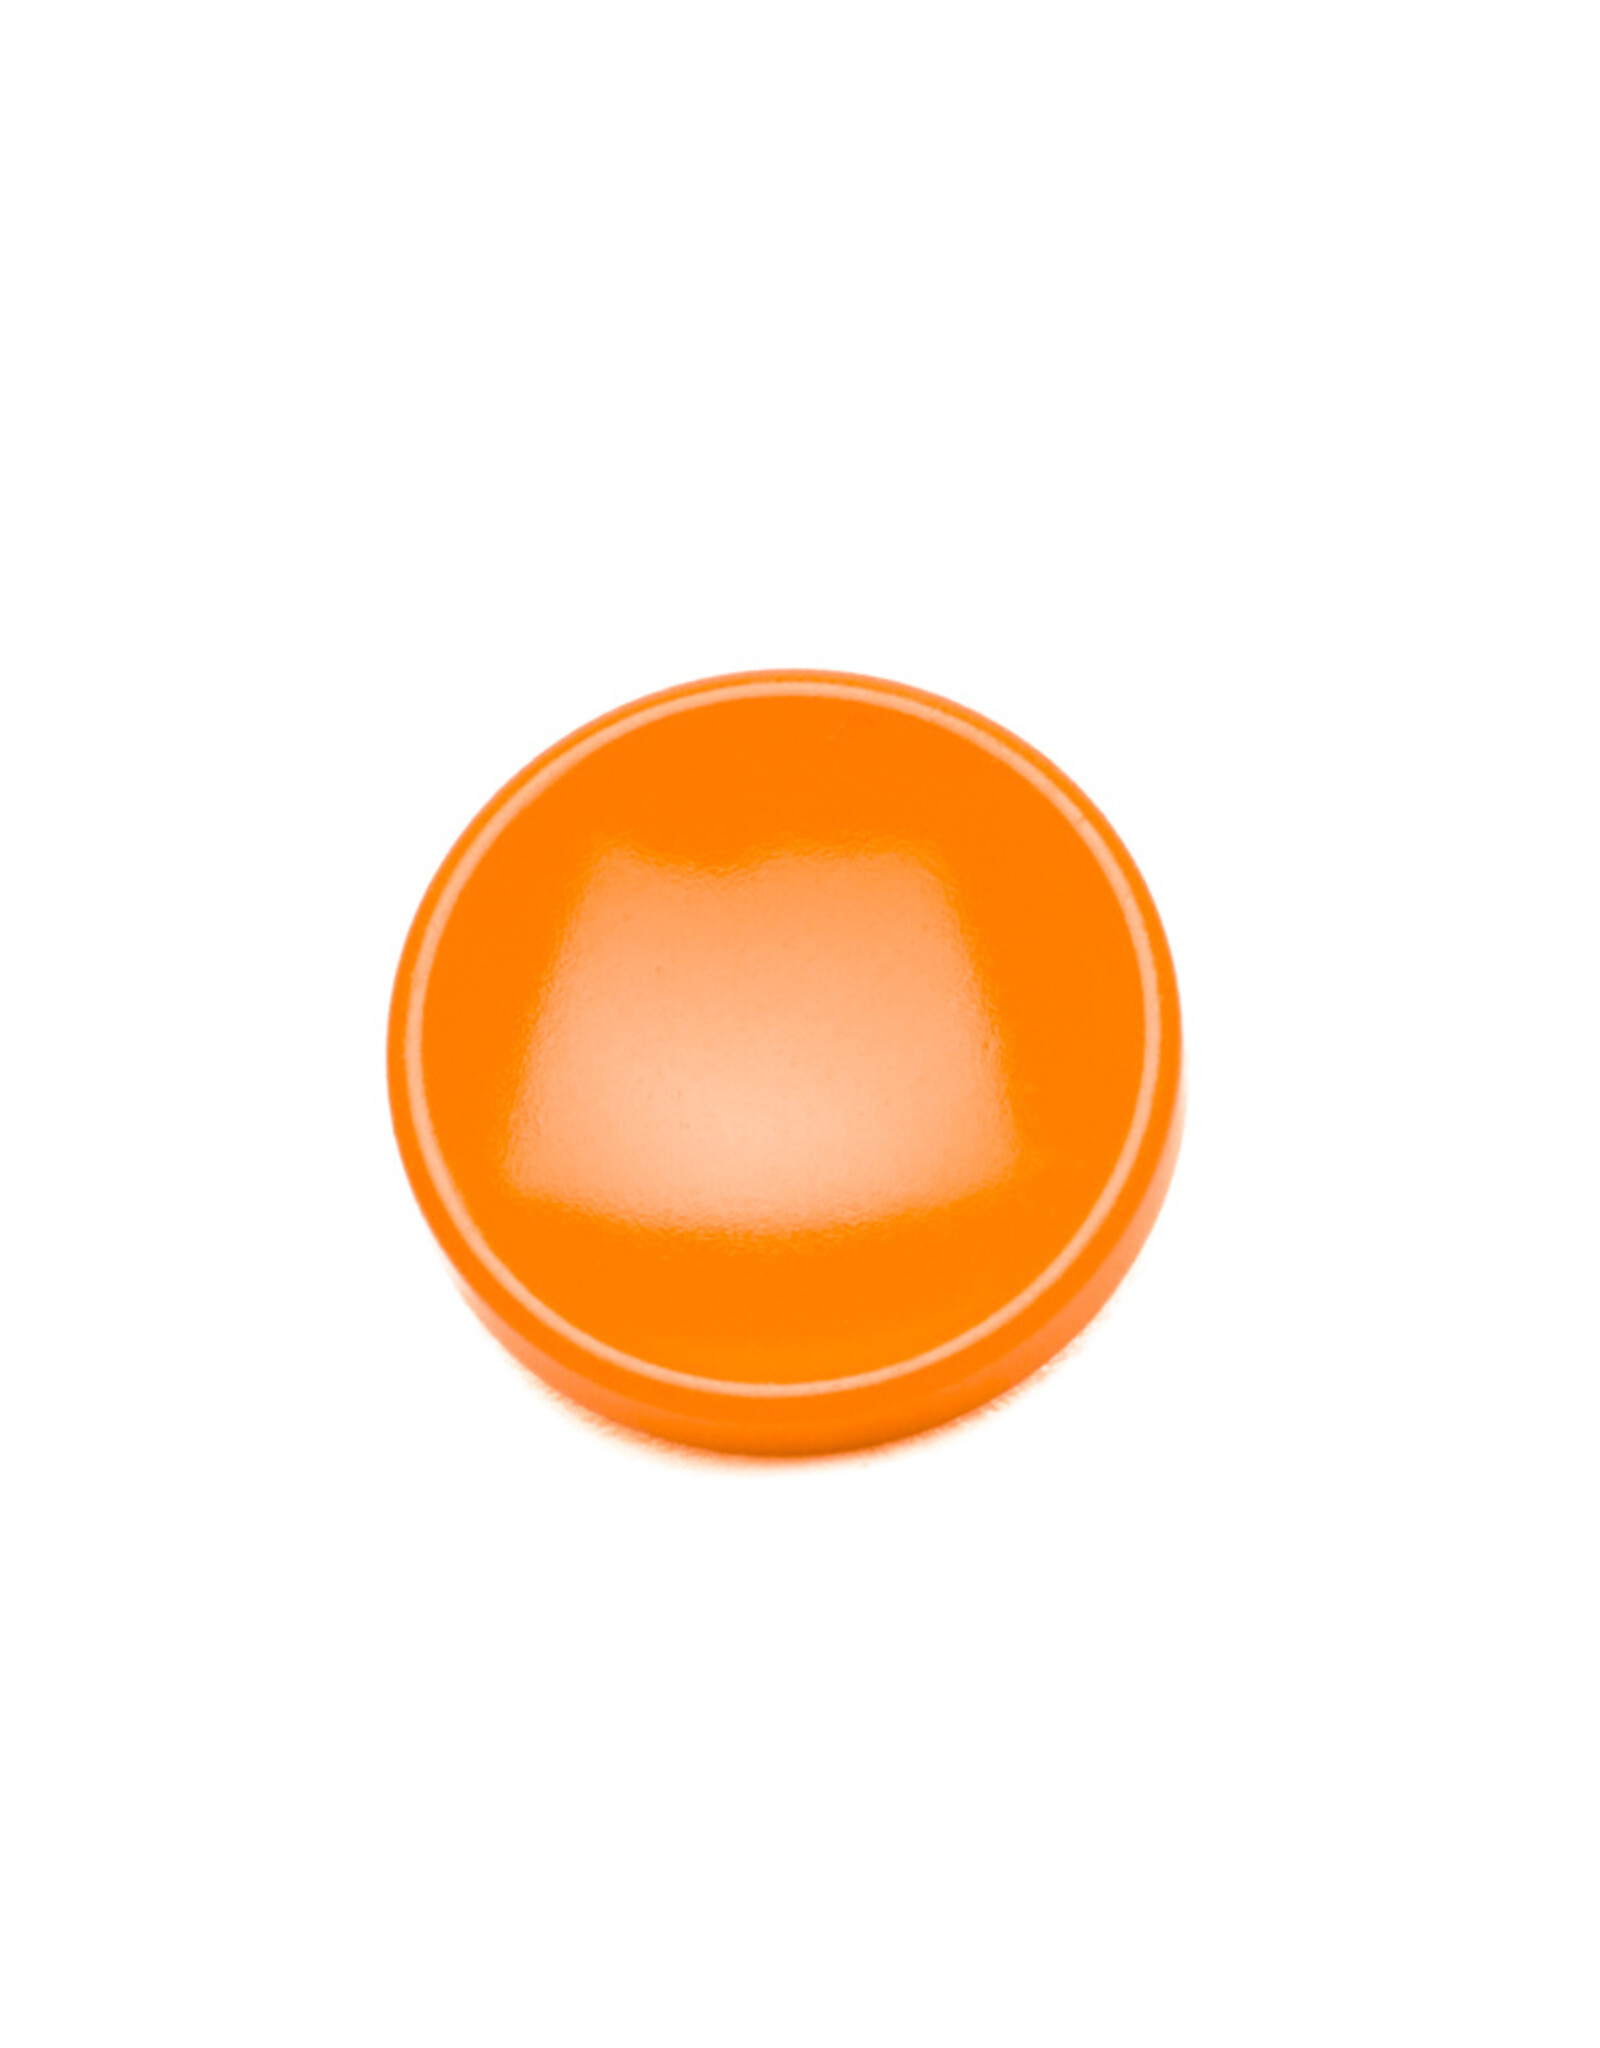 Metal Shutter Soft Release Button Orange Concave